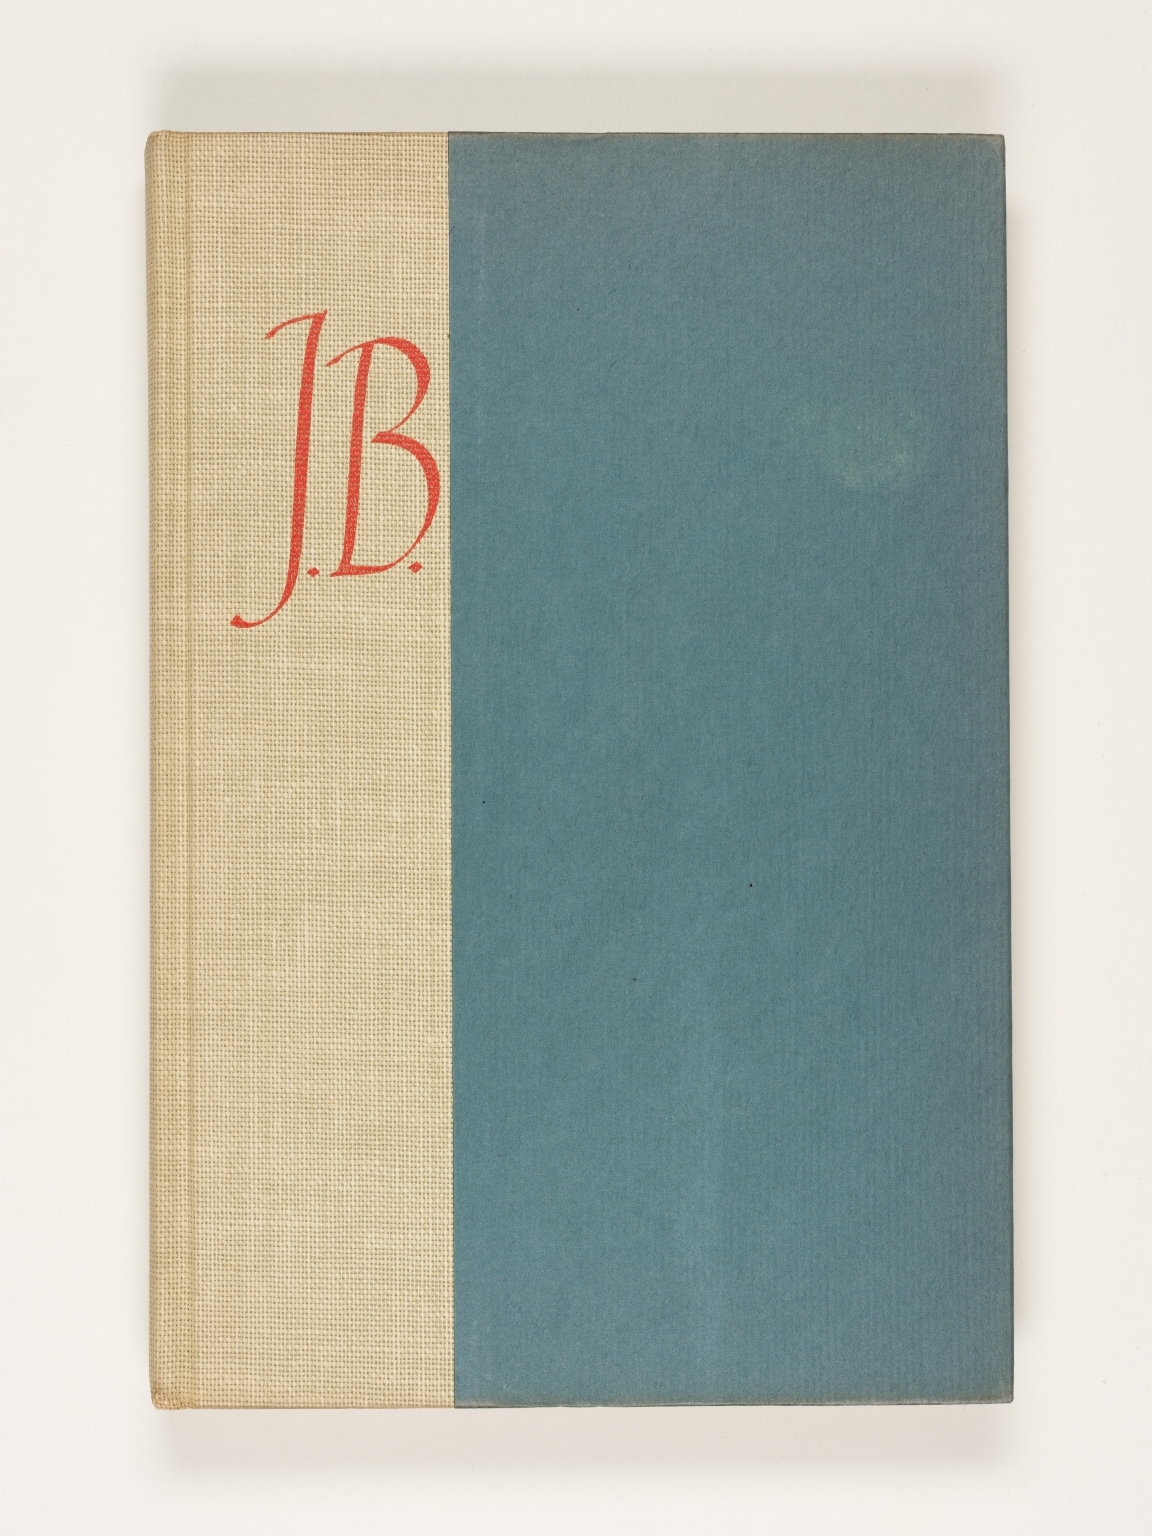 Book cover "J. B.: A Play in Verse"